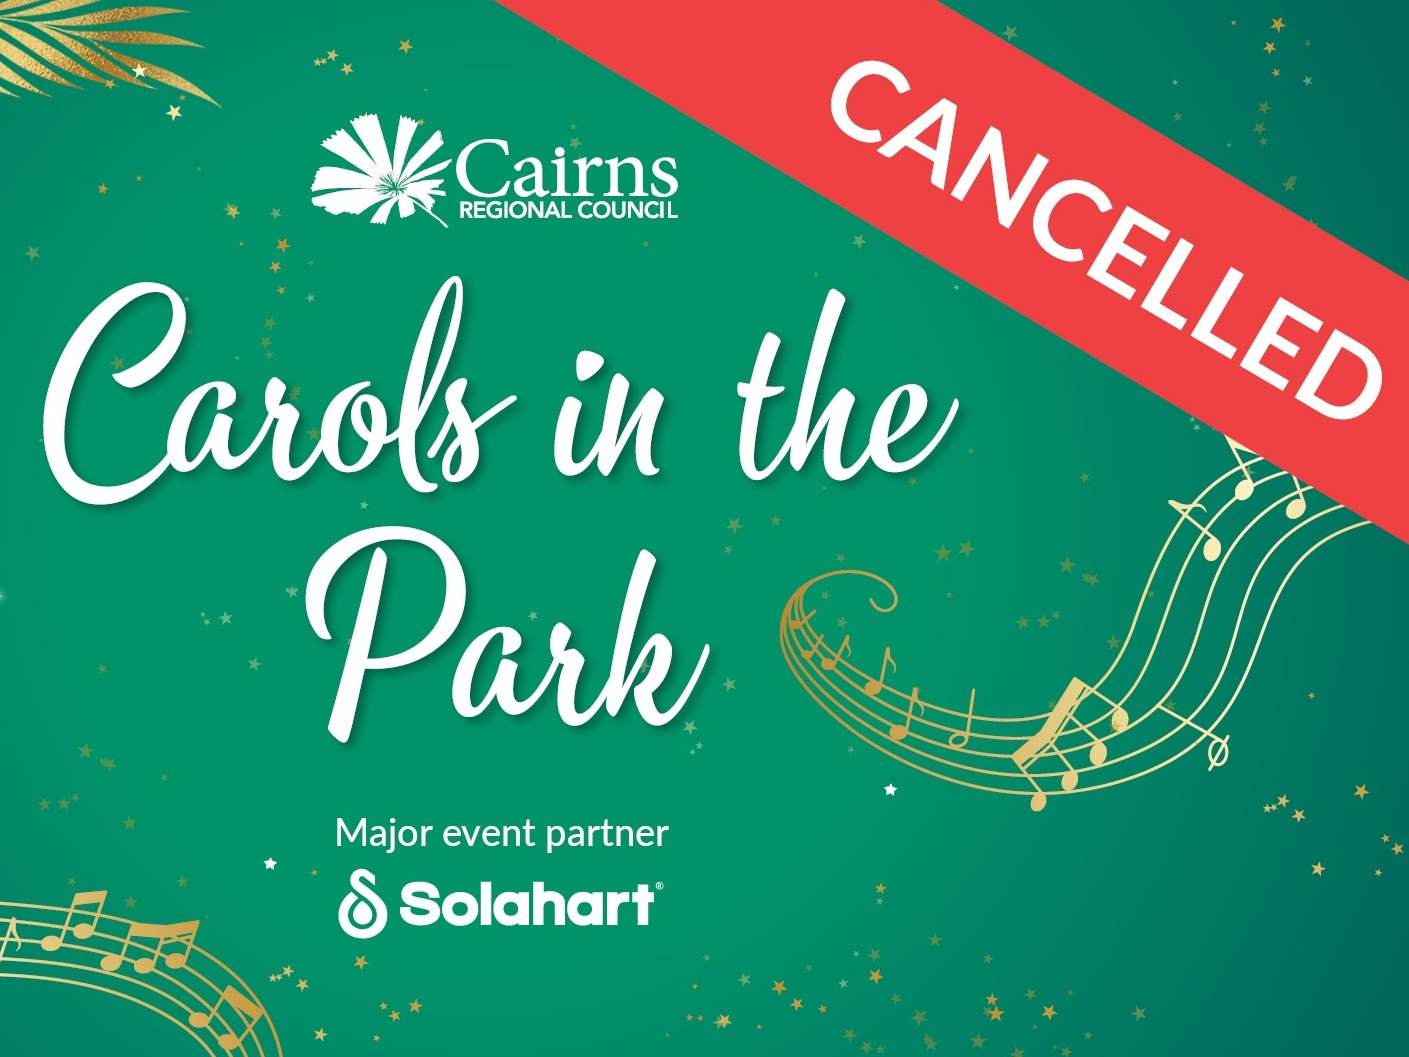 Carols event cancelled image